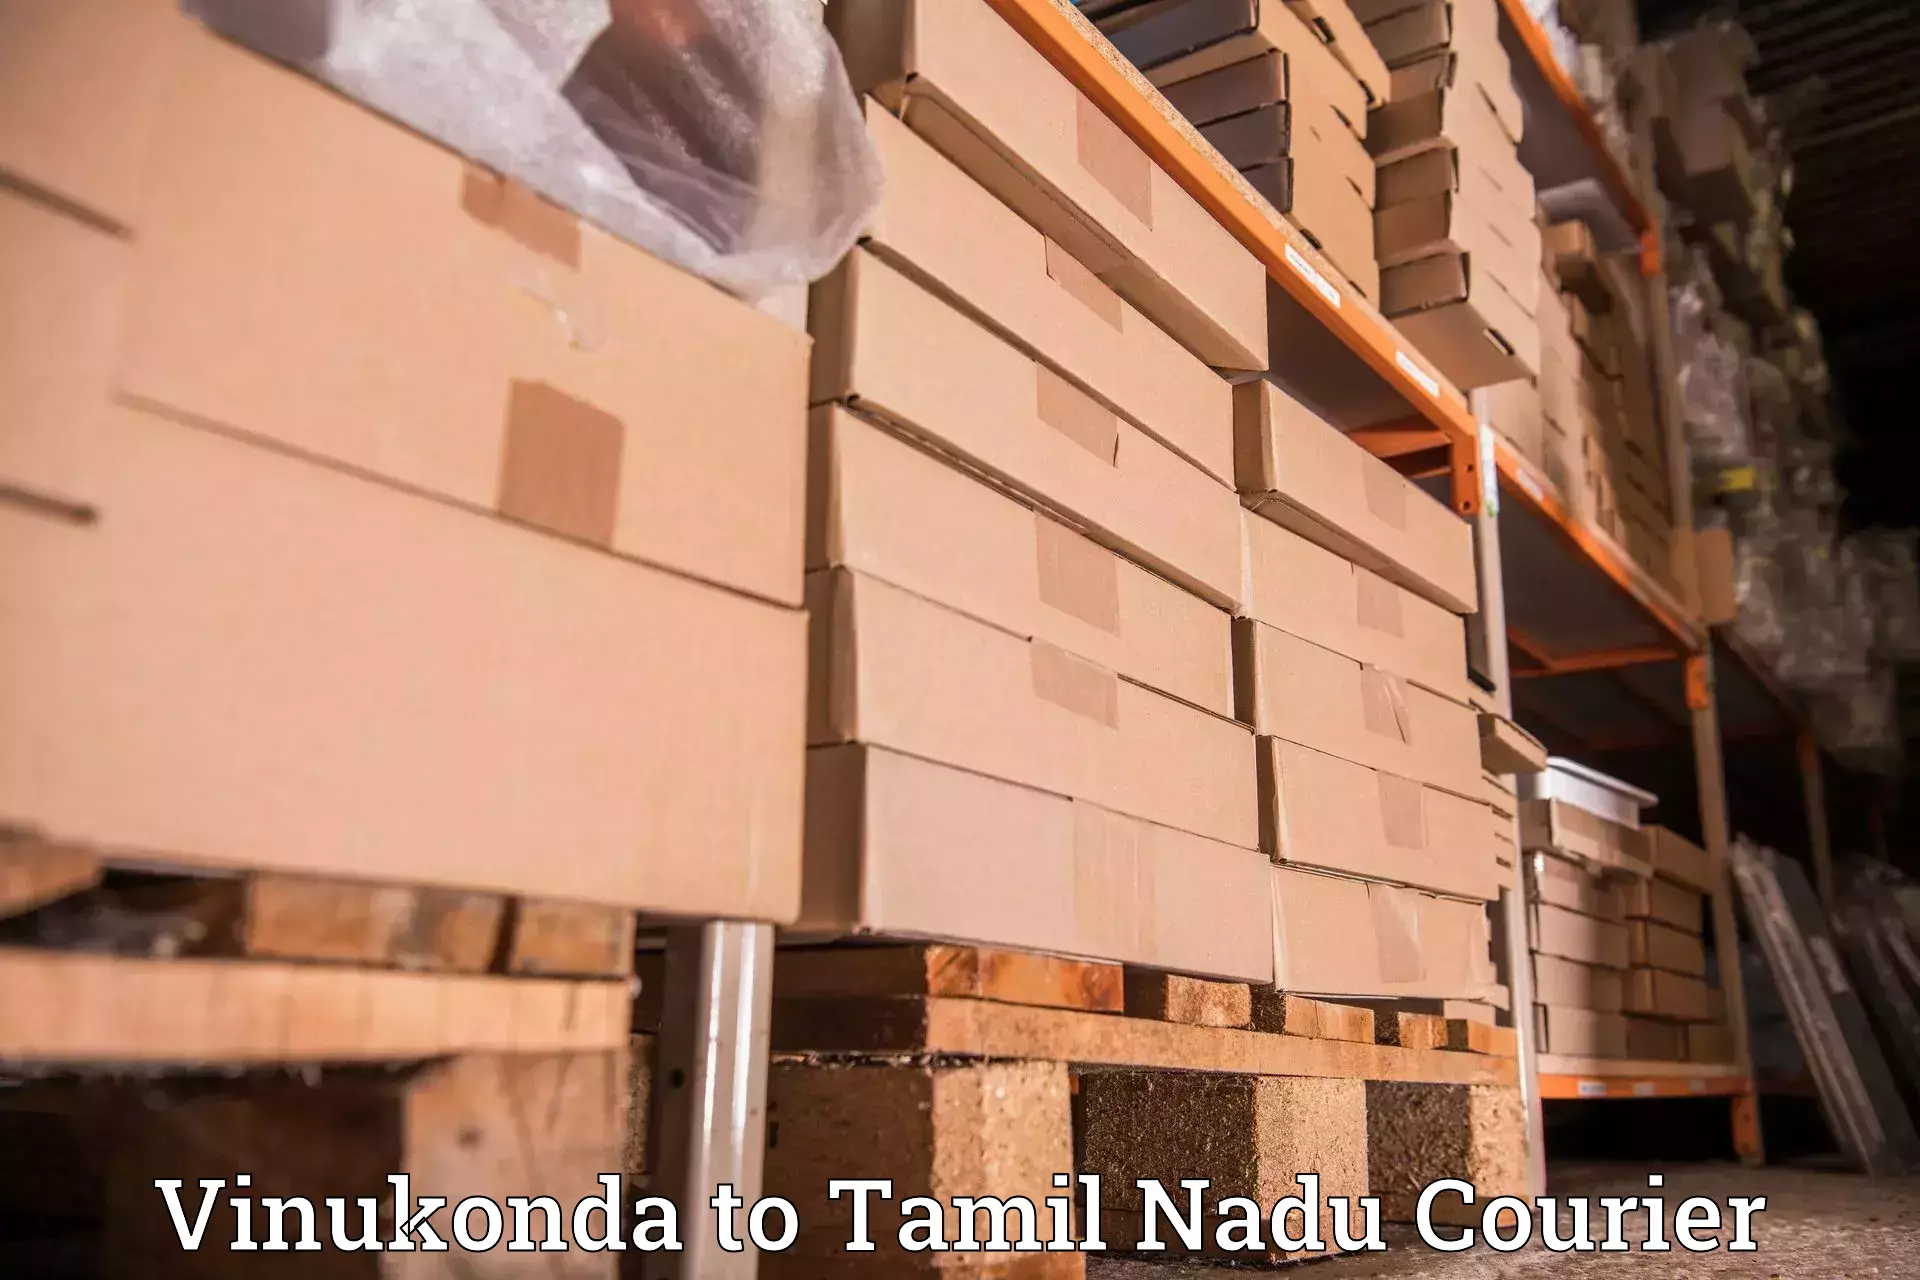 Doorstep delivery service Vinukonda to Perambalur